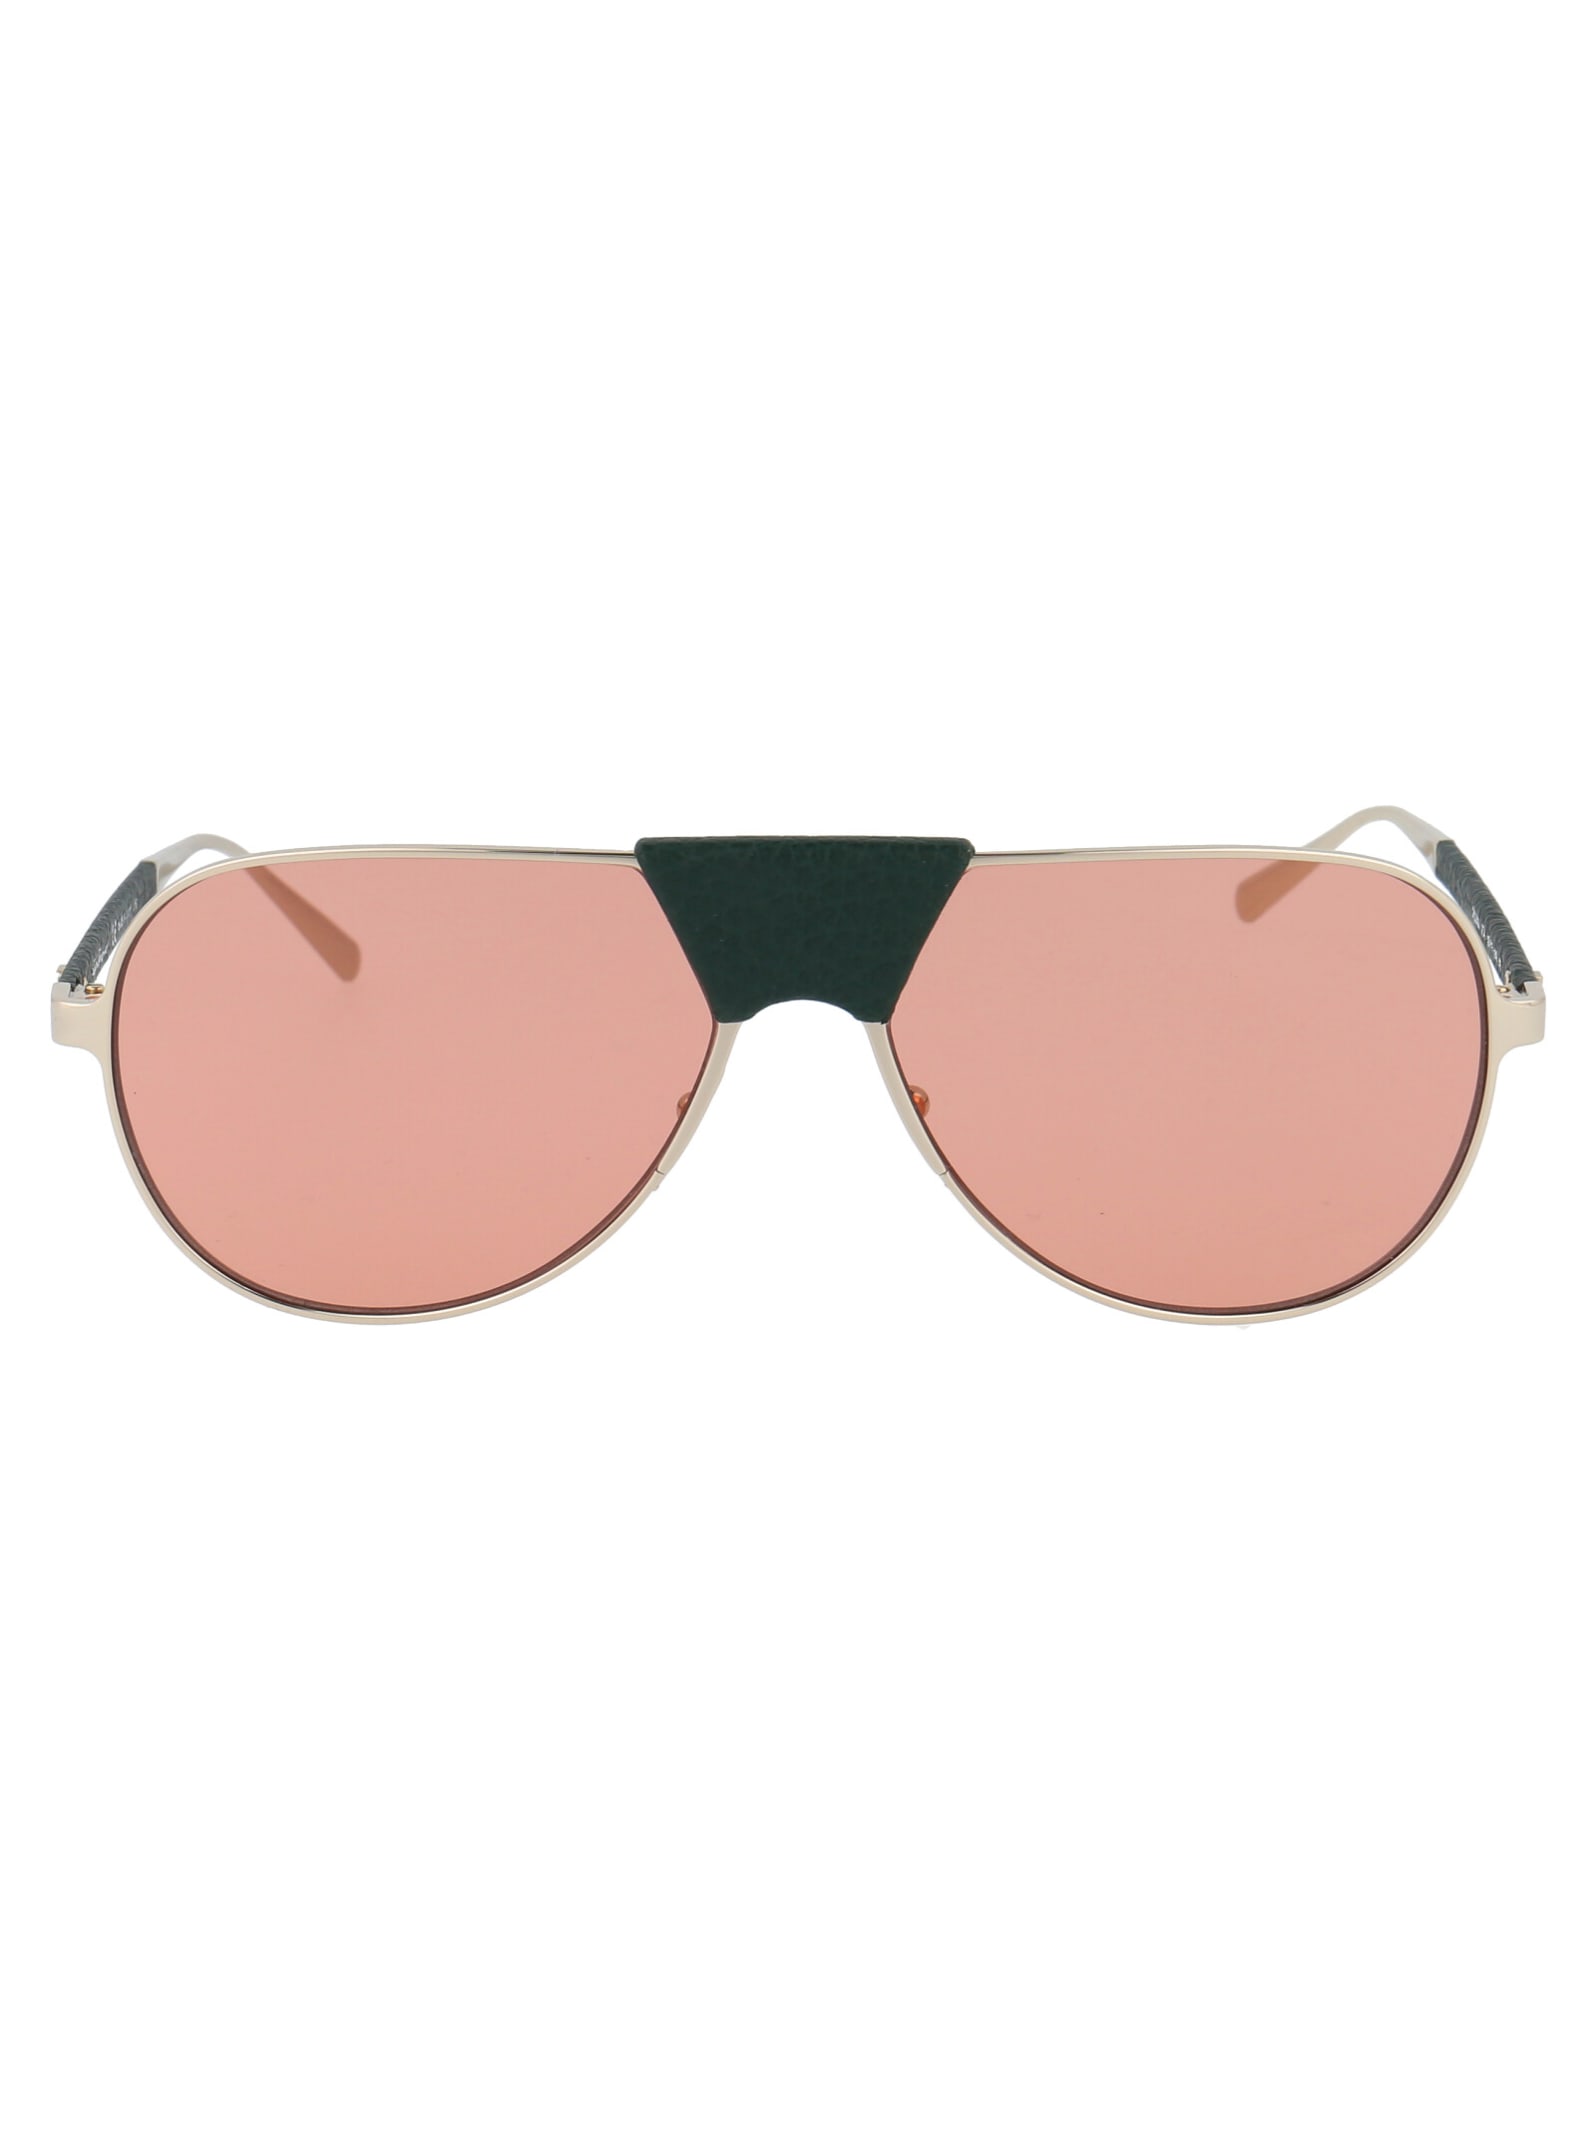 Salvatore Ferragamo Eyewear Sf220sl Sunglasses